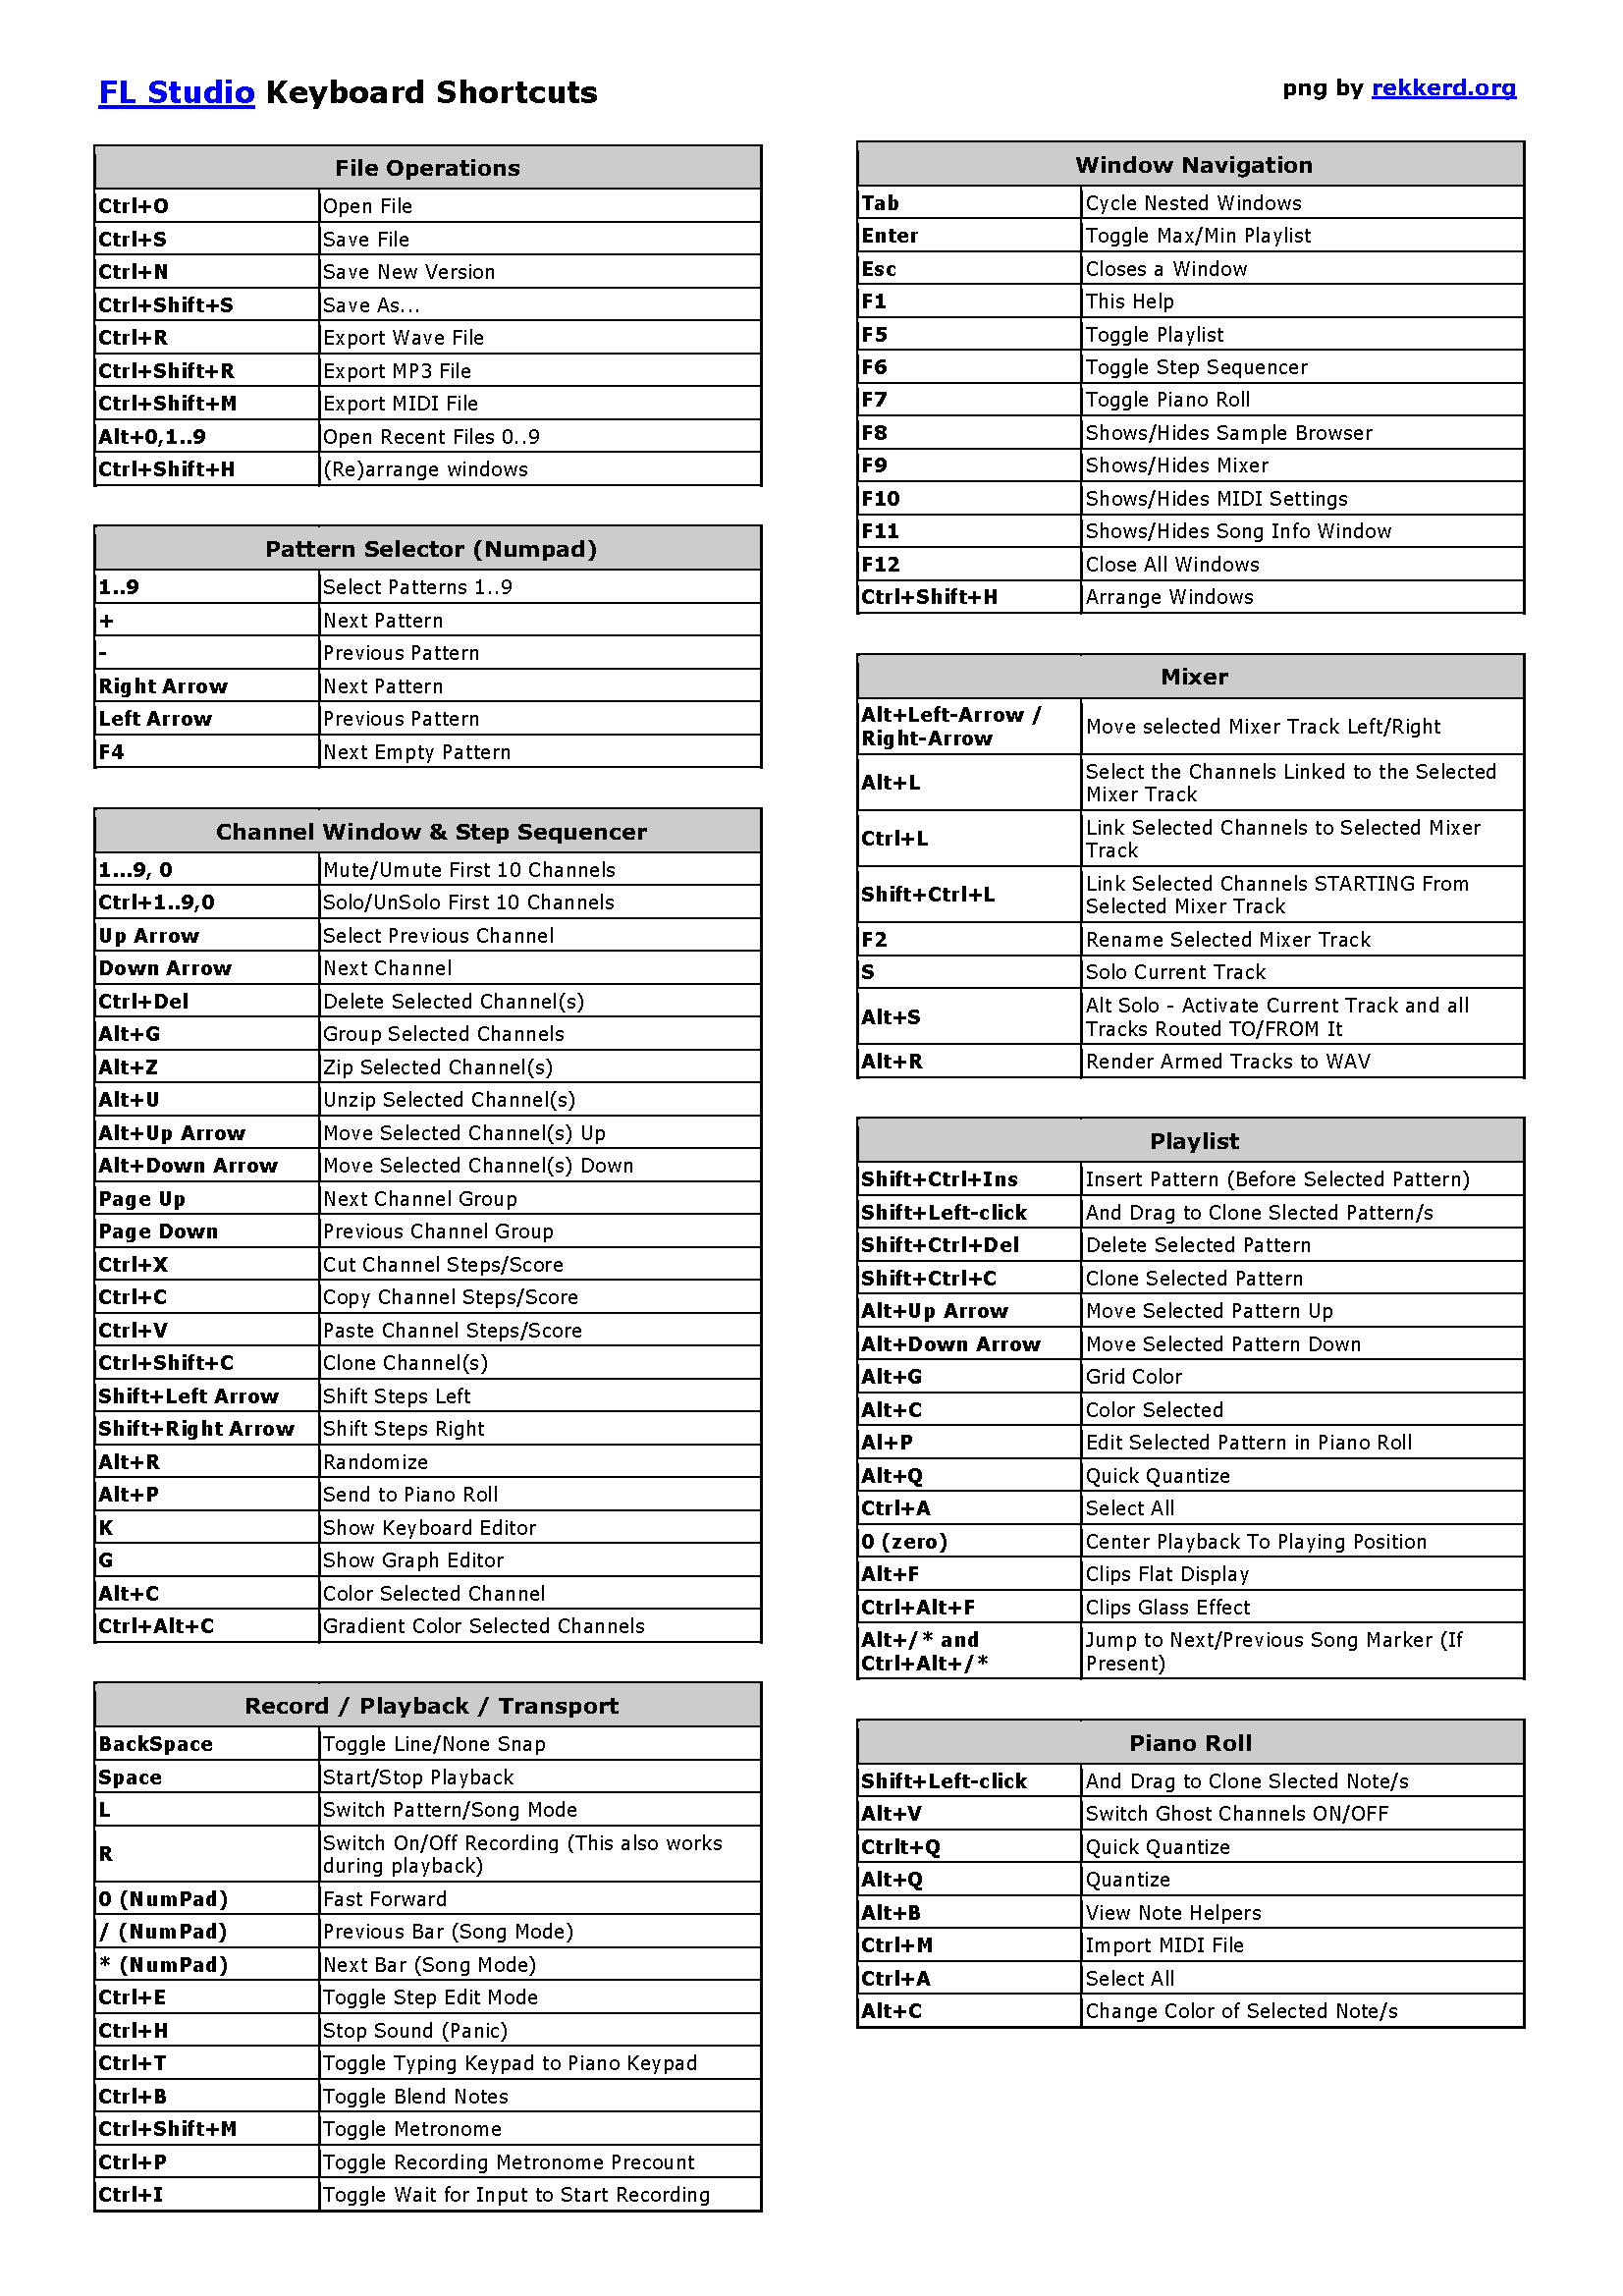 FL Studio Keyboard Shortcuts: Full List Of Most Important Ones